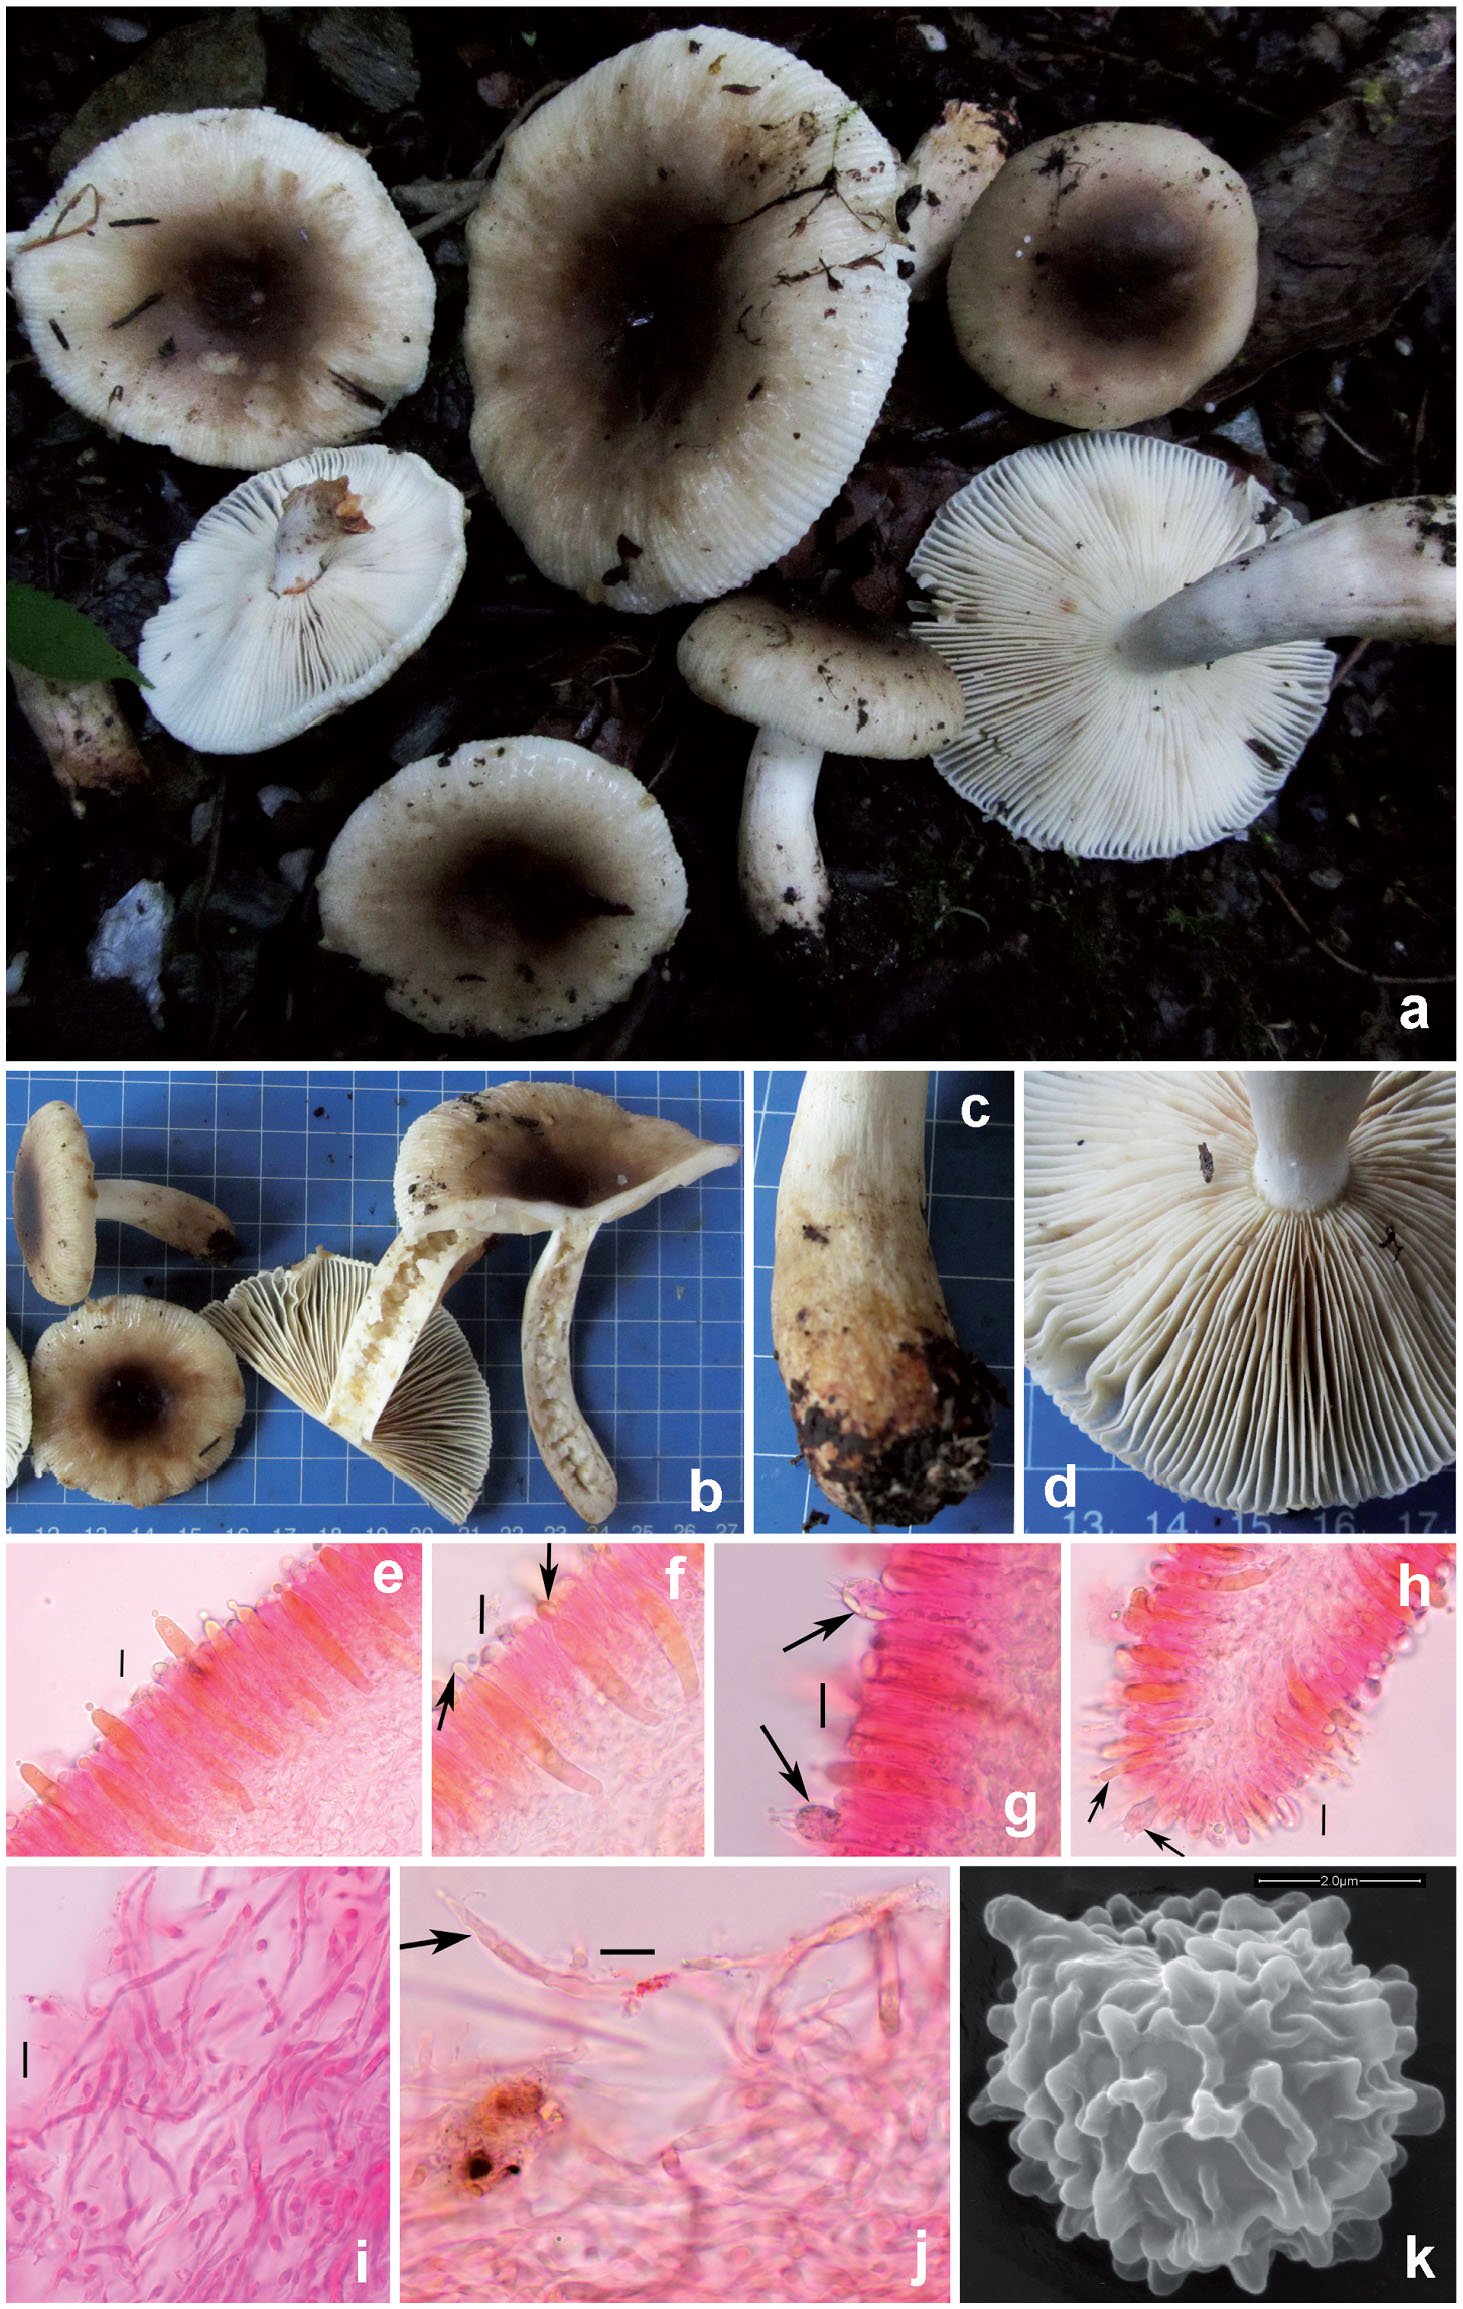 Fungal Biodiversity Profiles 31 40